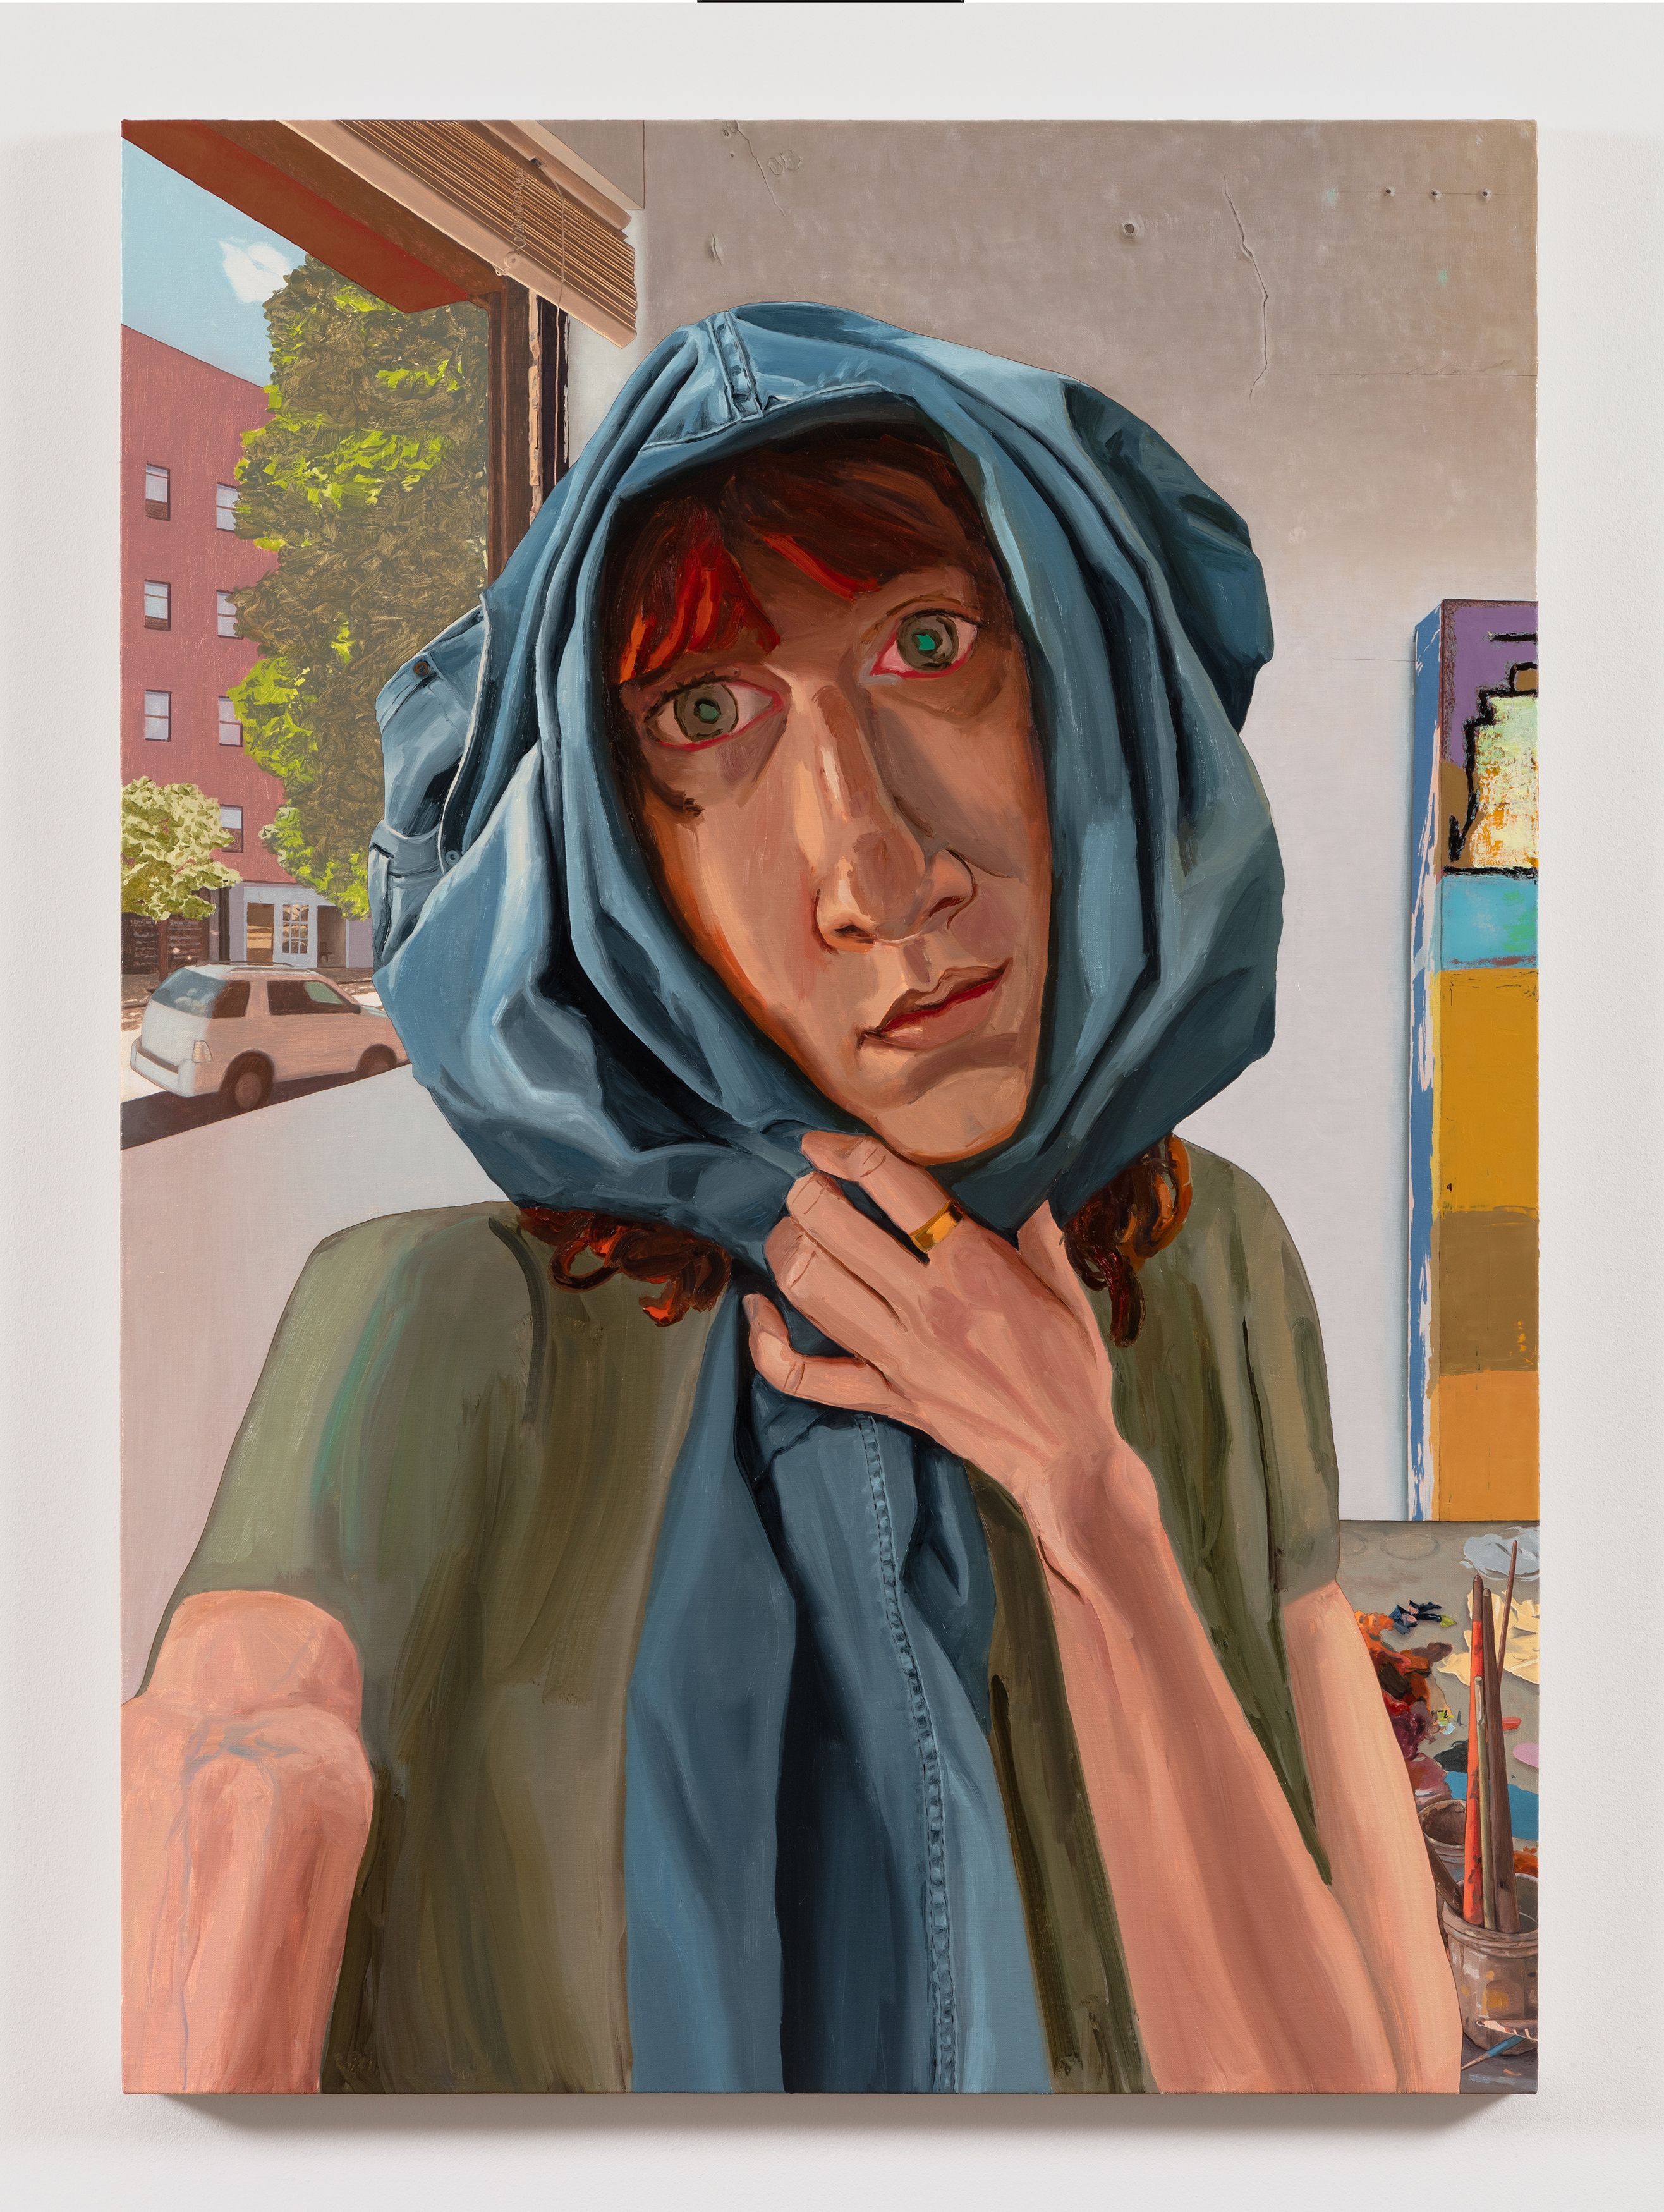 Anna Glantz, Eyesore, 2019, oil on canvas, 53 x 38 in. (134.62 x 96.52 cm)